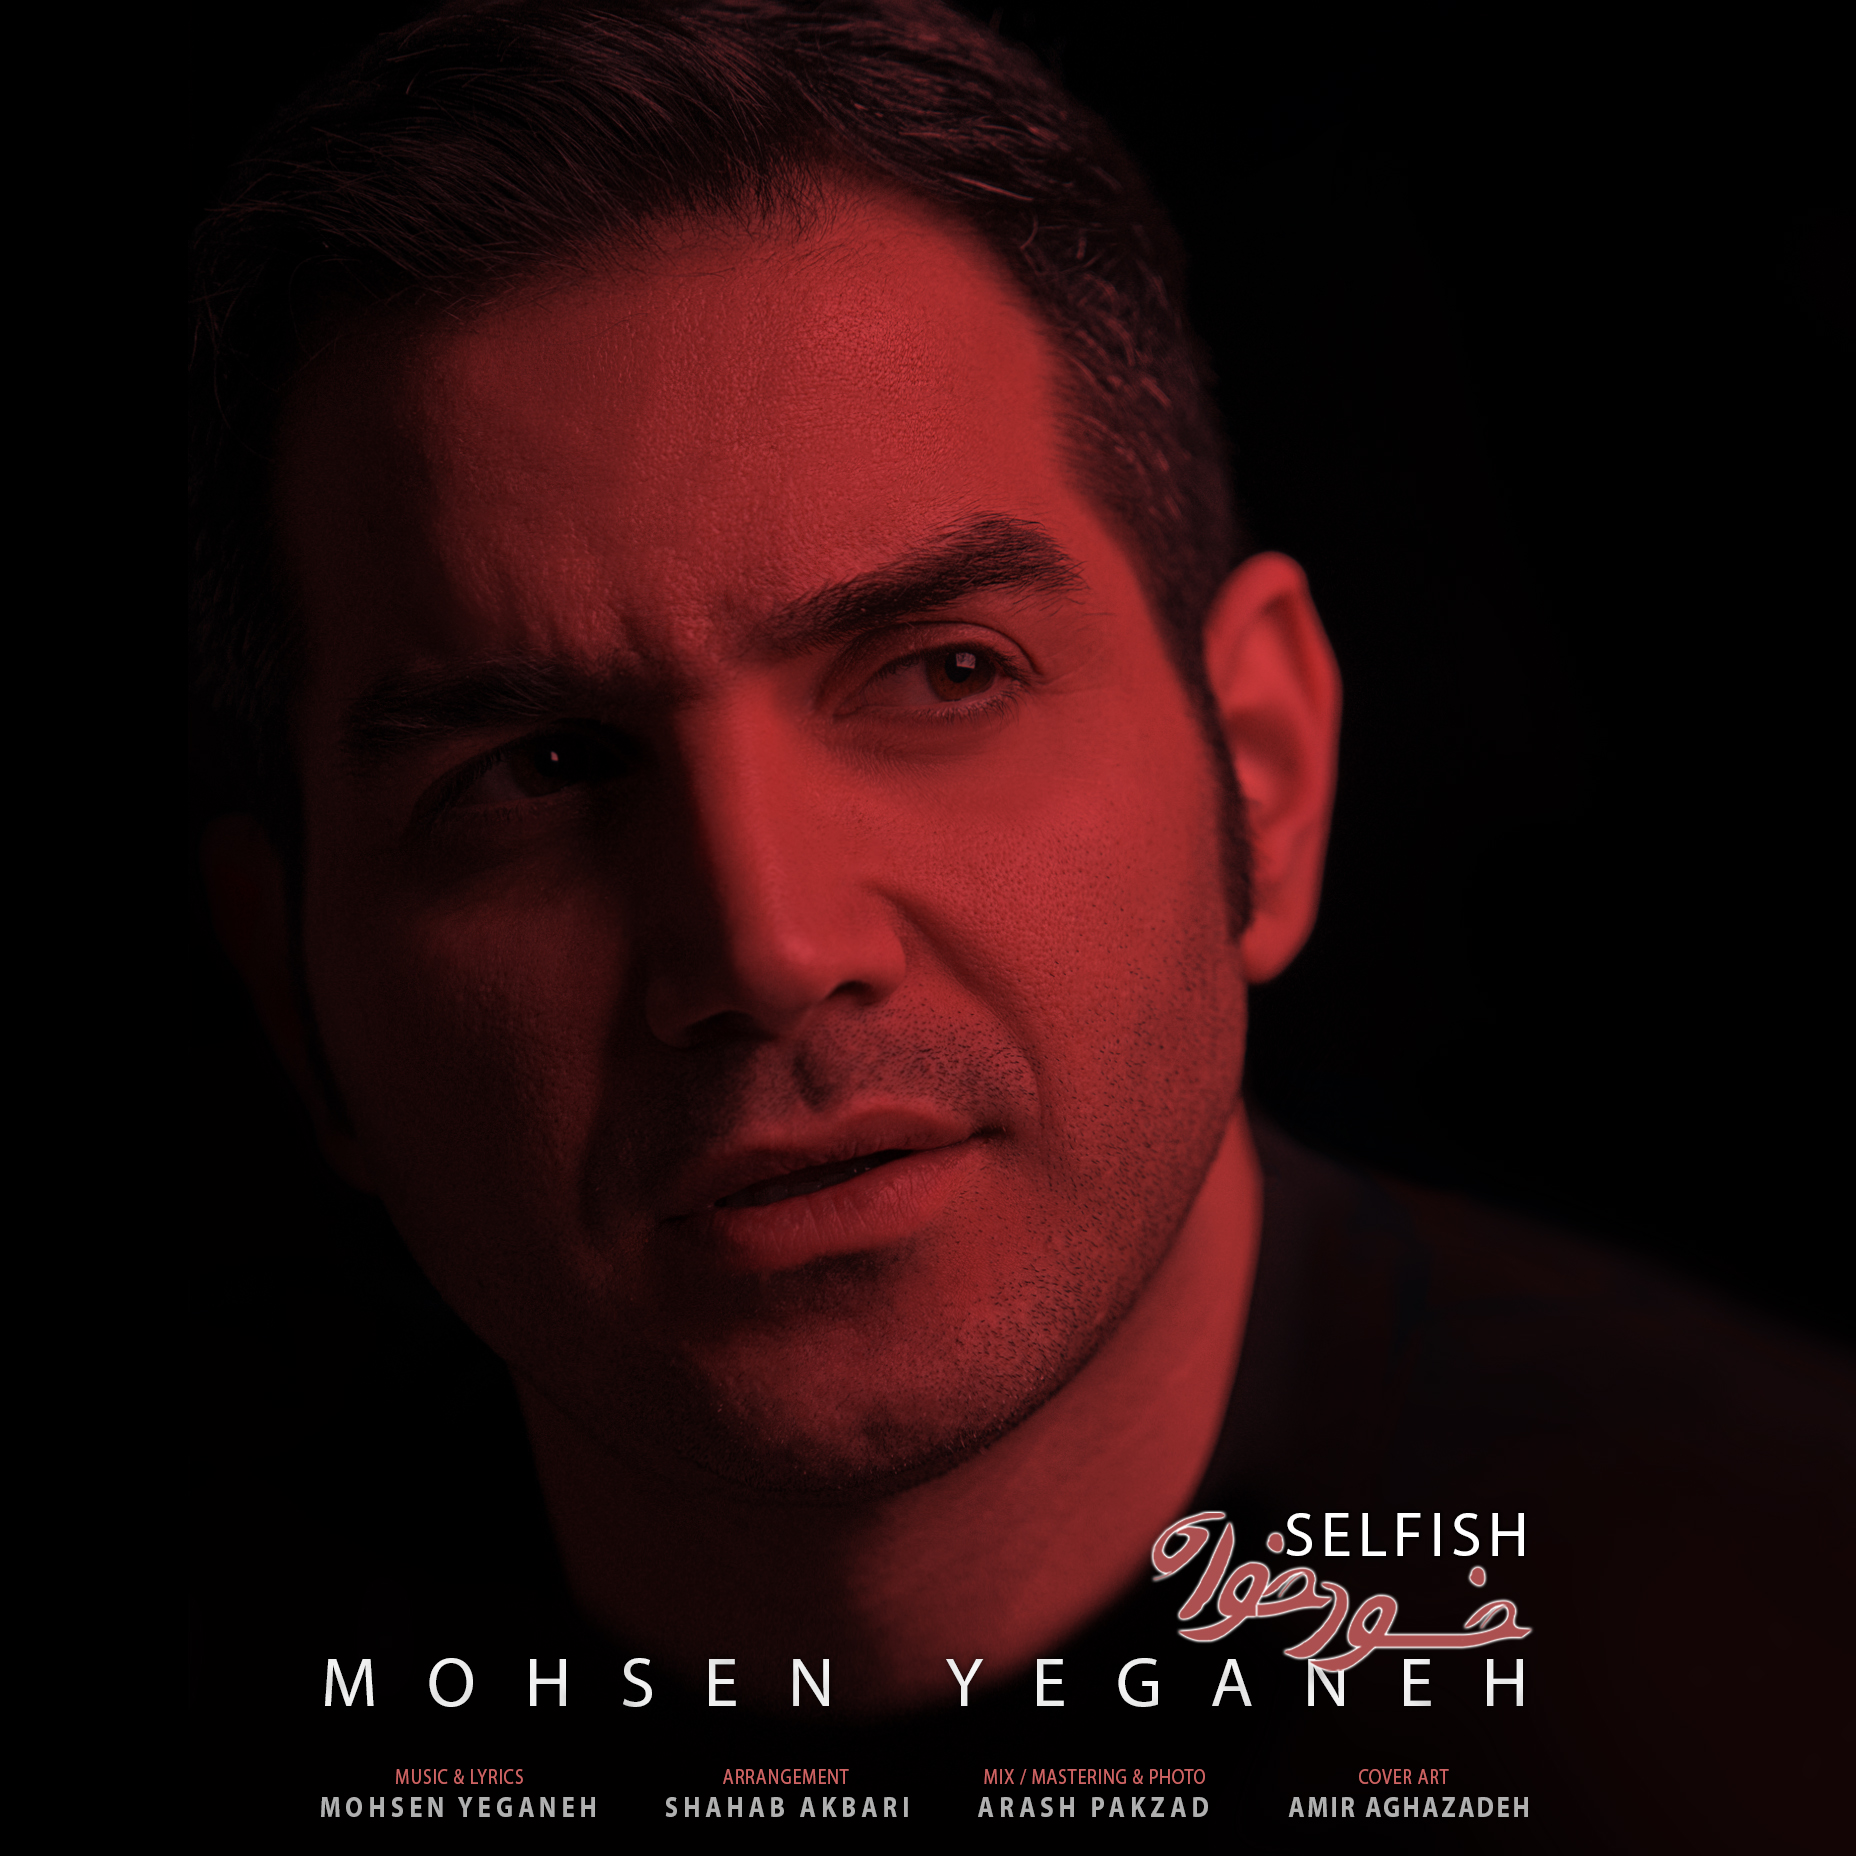  دانلود آهنگ جدید محسن یگانه - خودخواه | Download New Music By Mohsen Yeganeh - Khodkhah